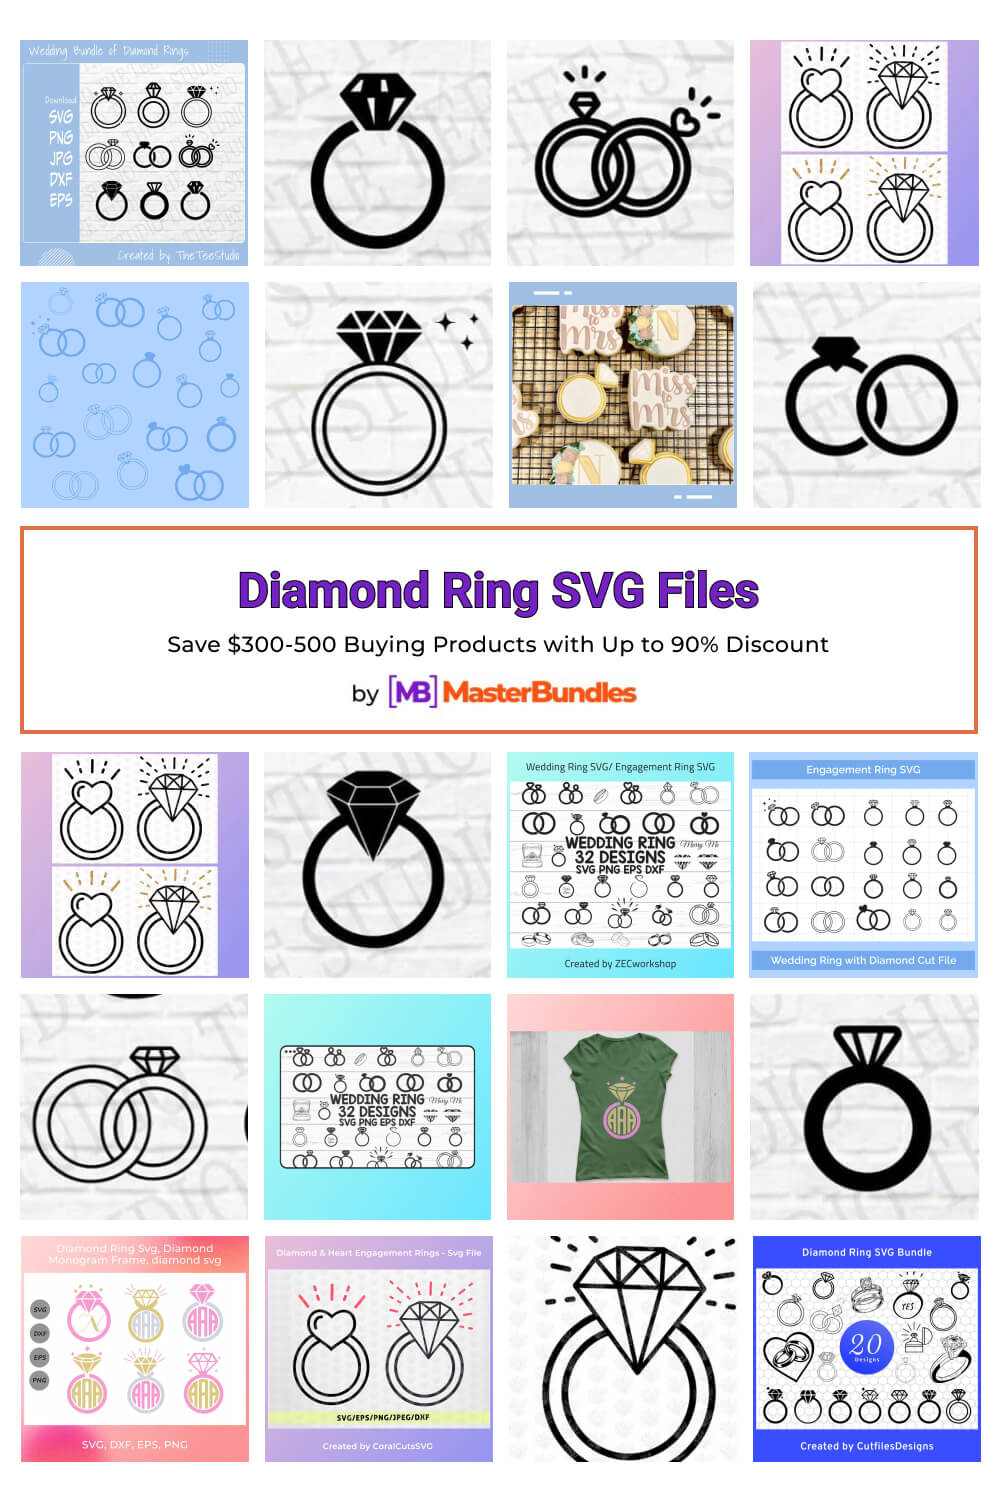 diamond ring svg files pinterest image.